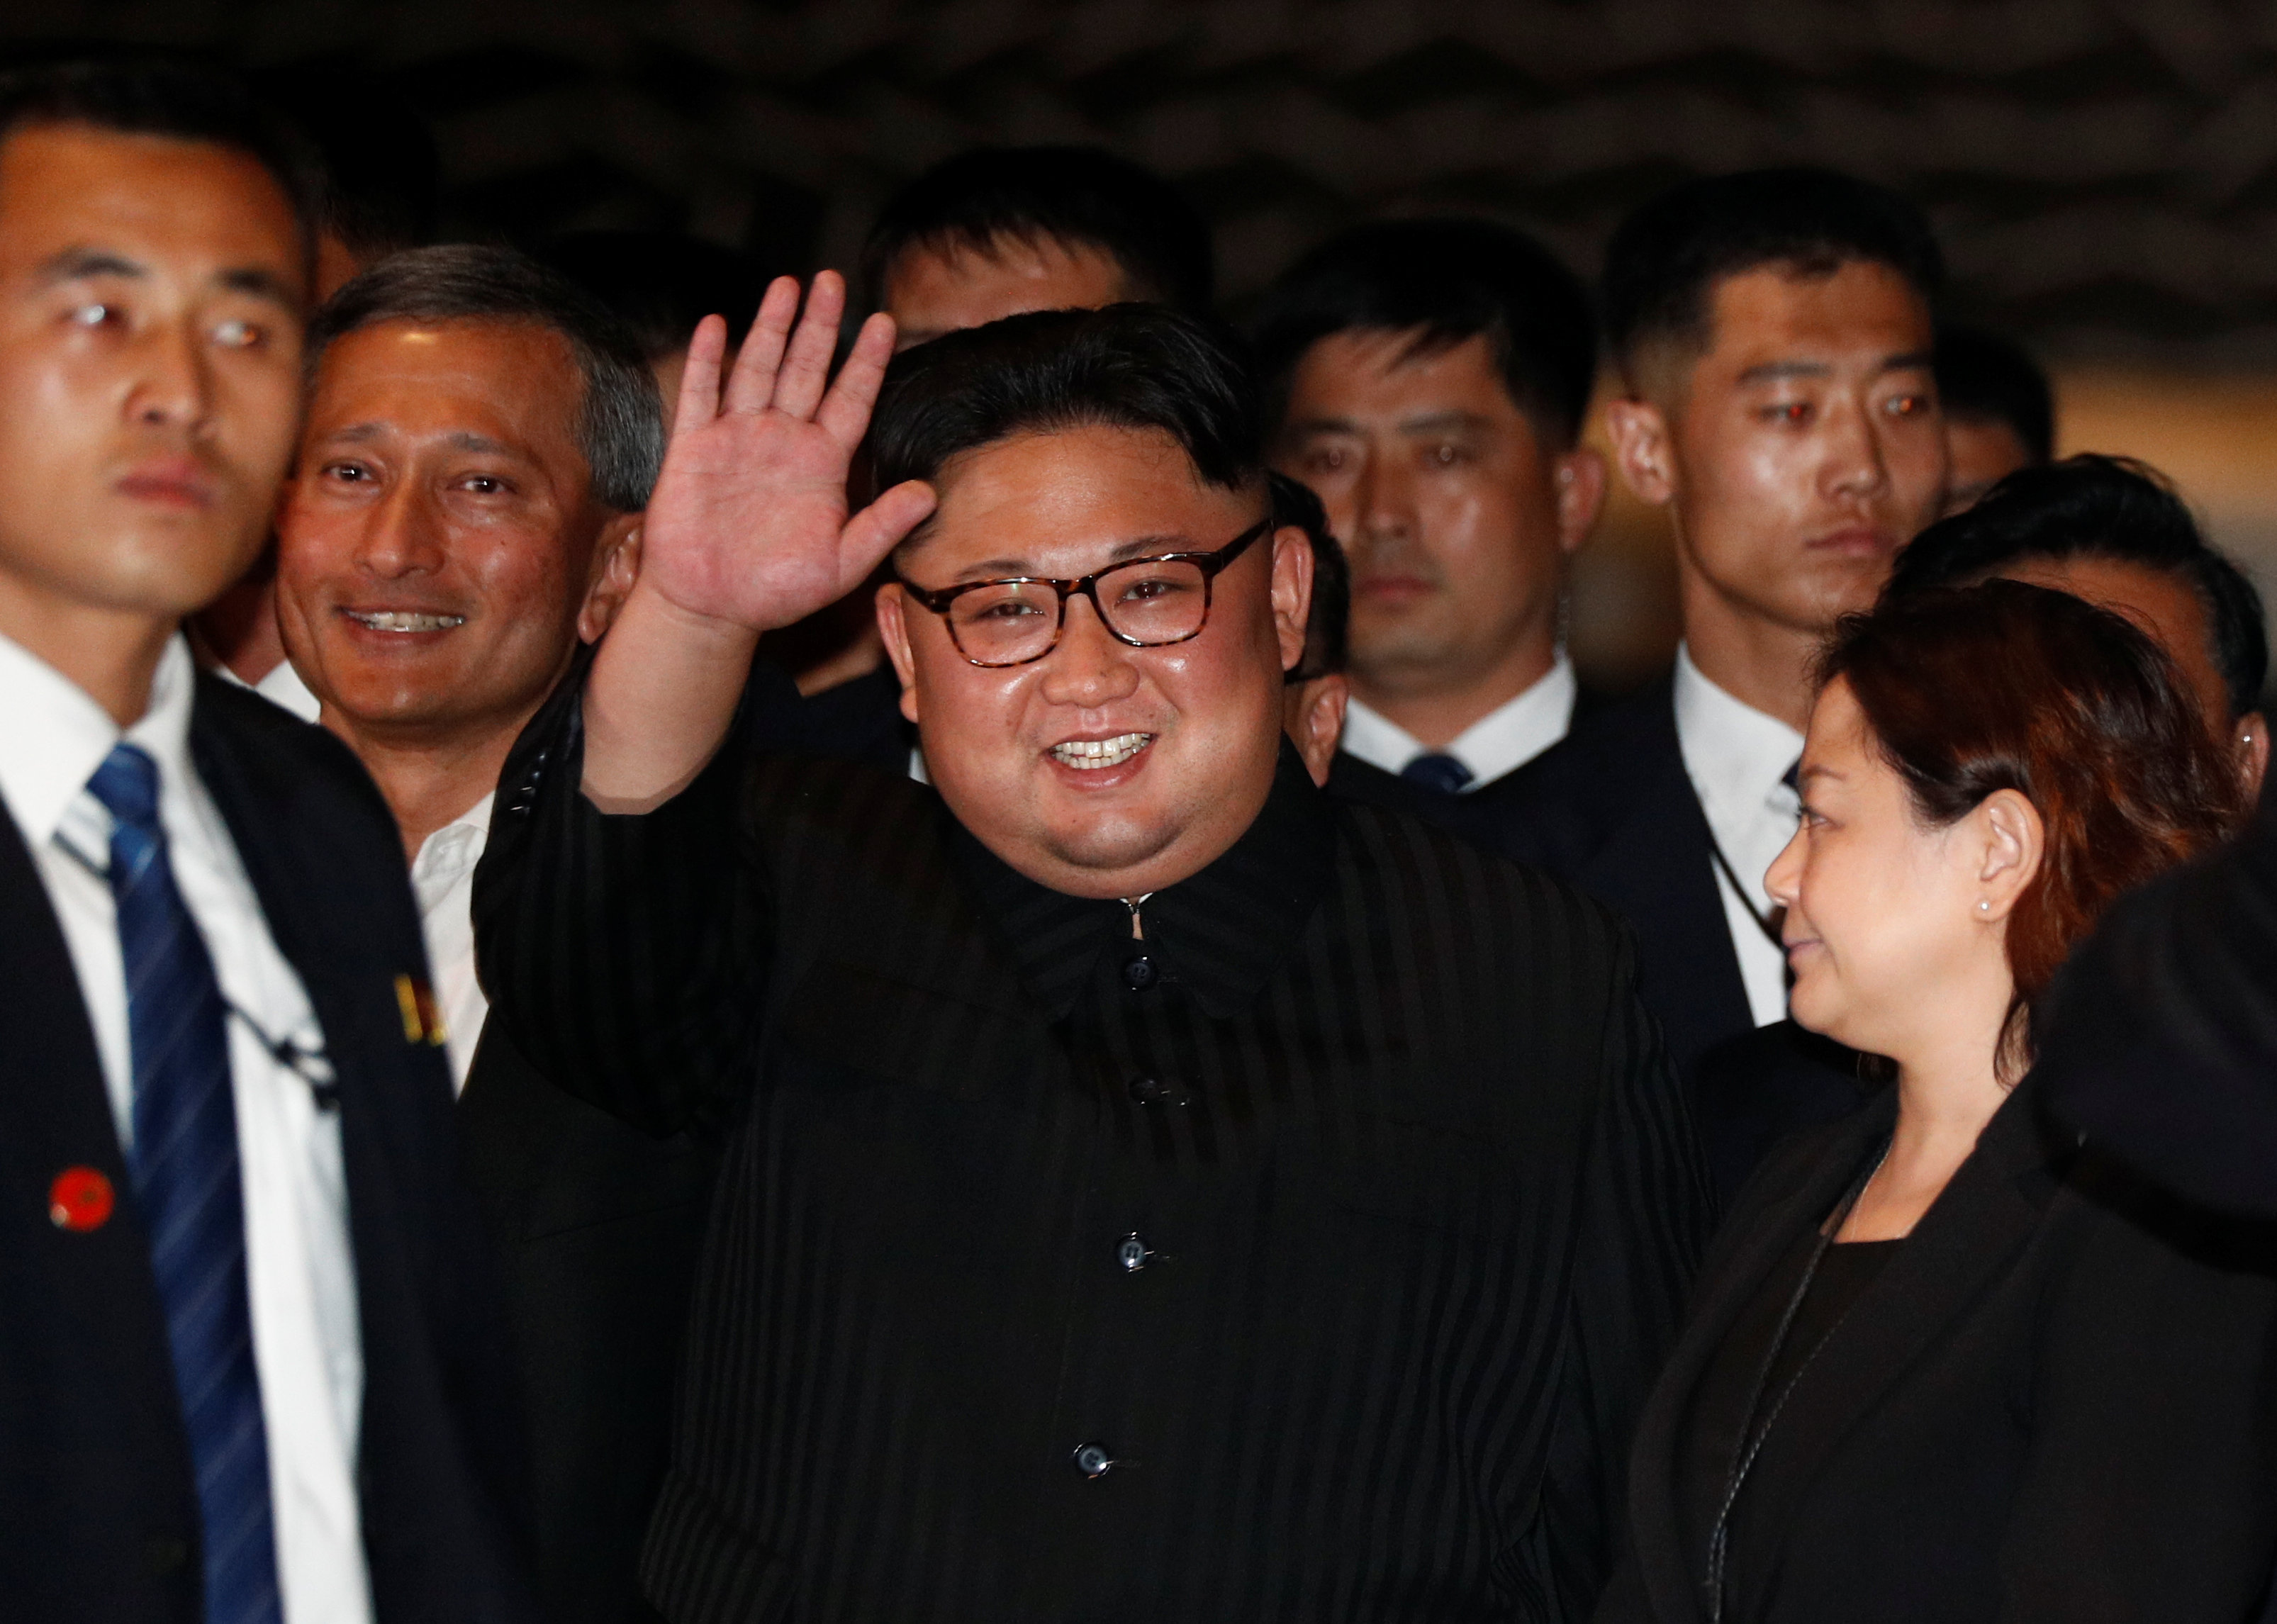 North Korea's leader Kim Jong Un visits The Marina Bay Sands hotel in Singapore